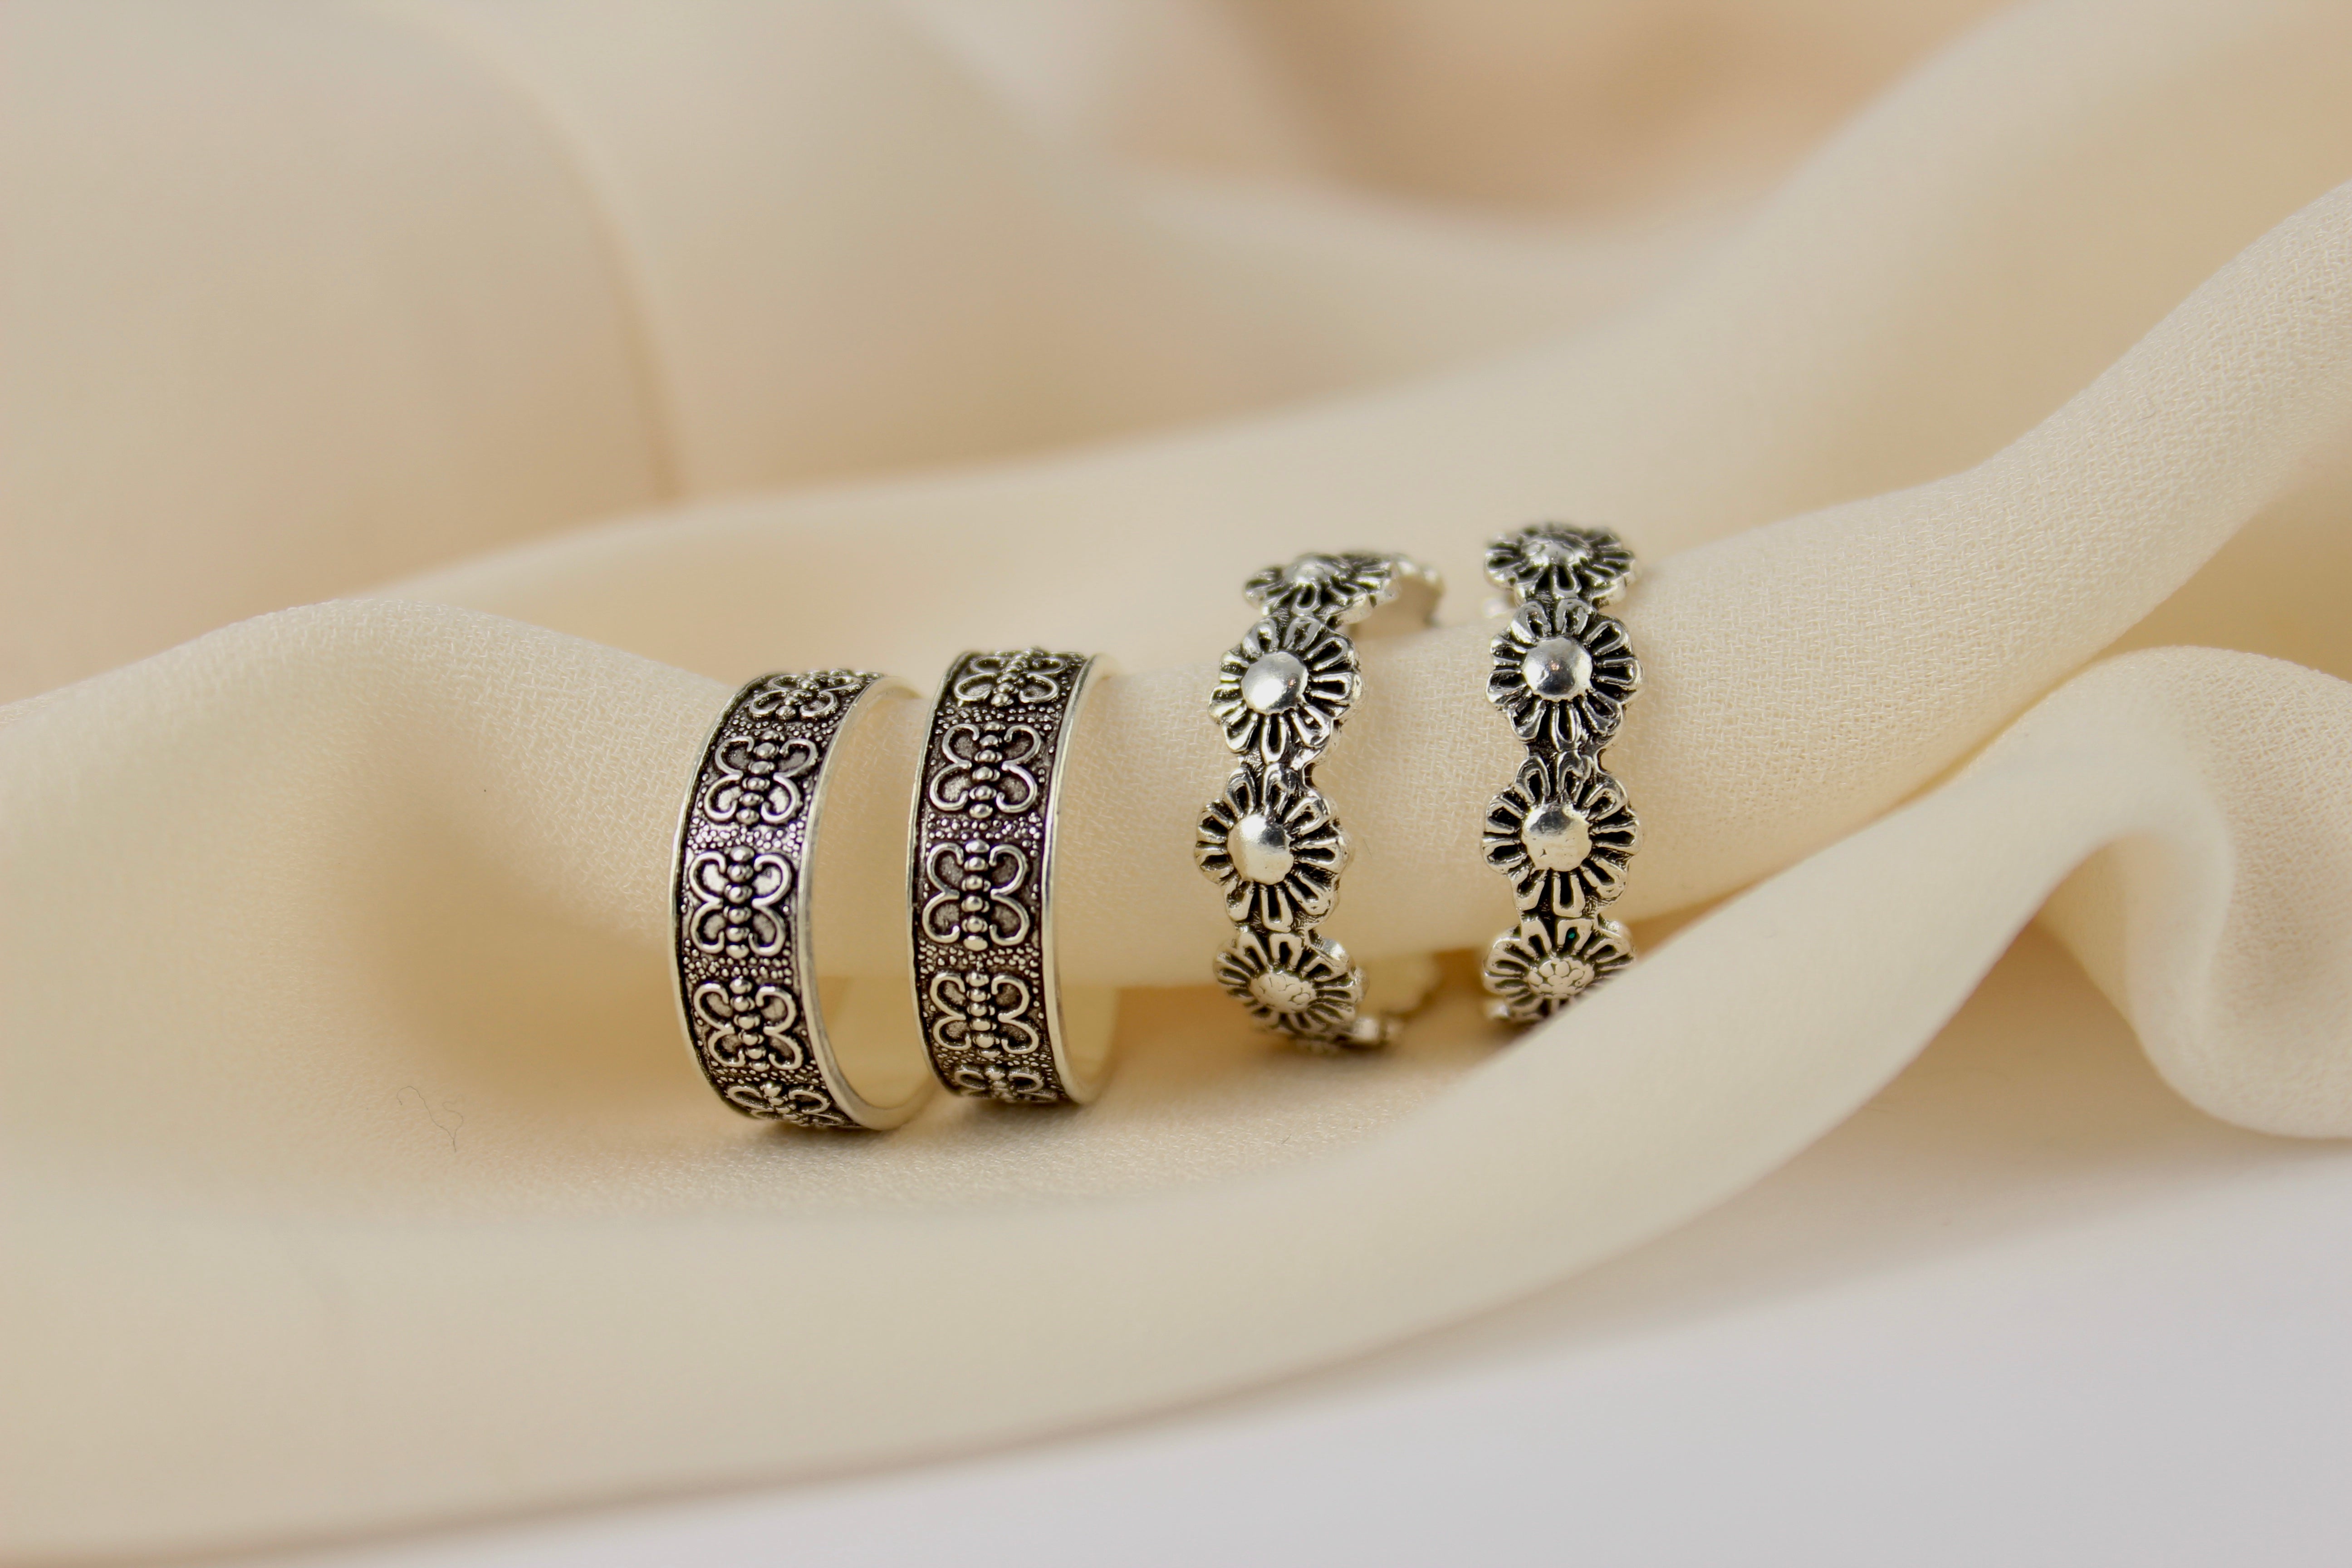 Toe Ring summer outdoor wear toe ring set - wedding gift toe ring - be –  EkPuja Ltd